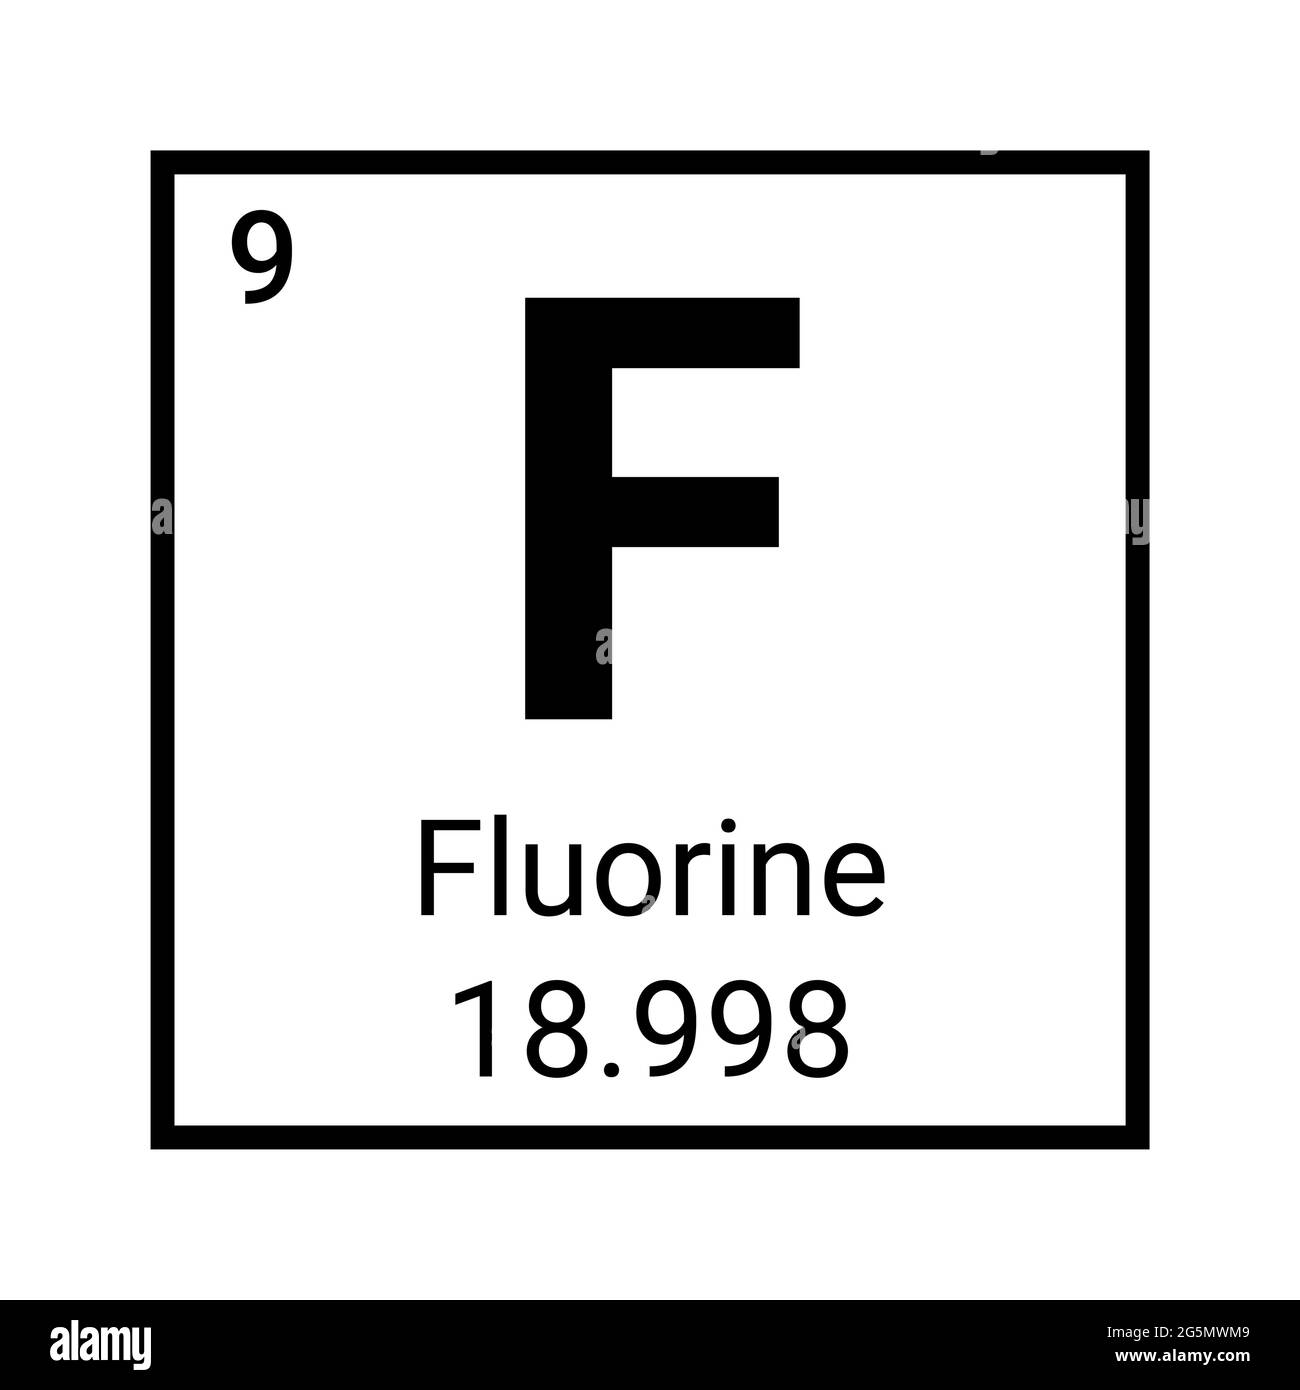 Fluorine Uses Properties Facts Britannica 52 Off